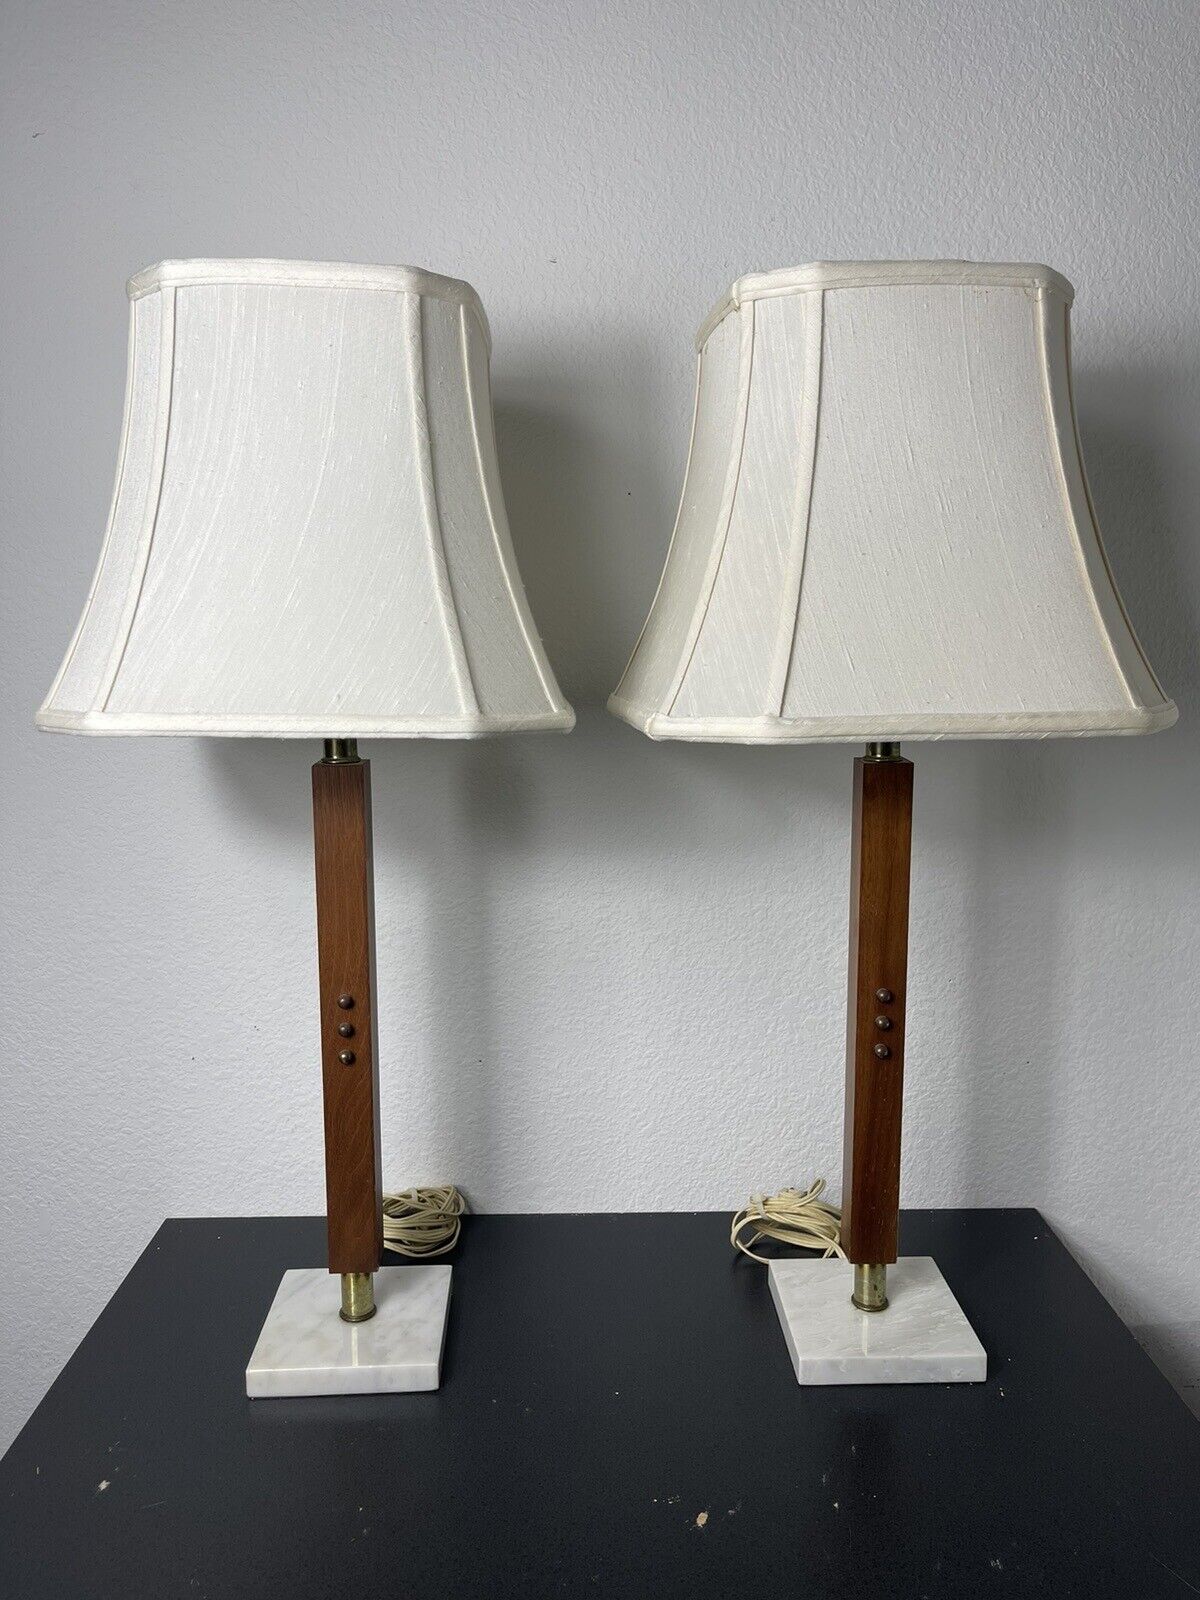 VINTAGE LAUREL LAMP CO TABLE LAMP MCM MID CENTURY MODERN BRASS WALNUT MARBLE